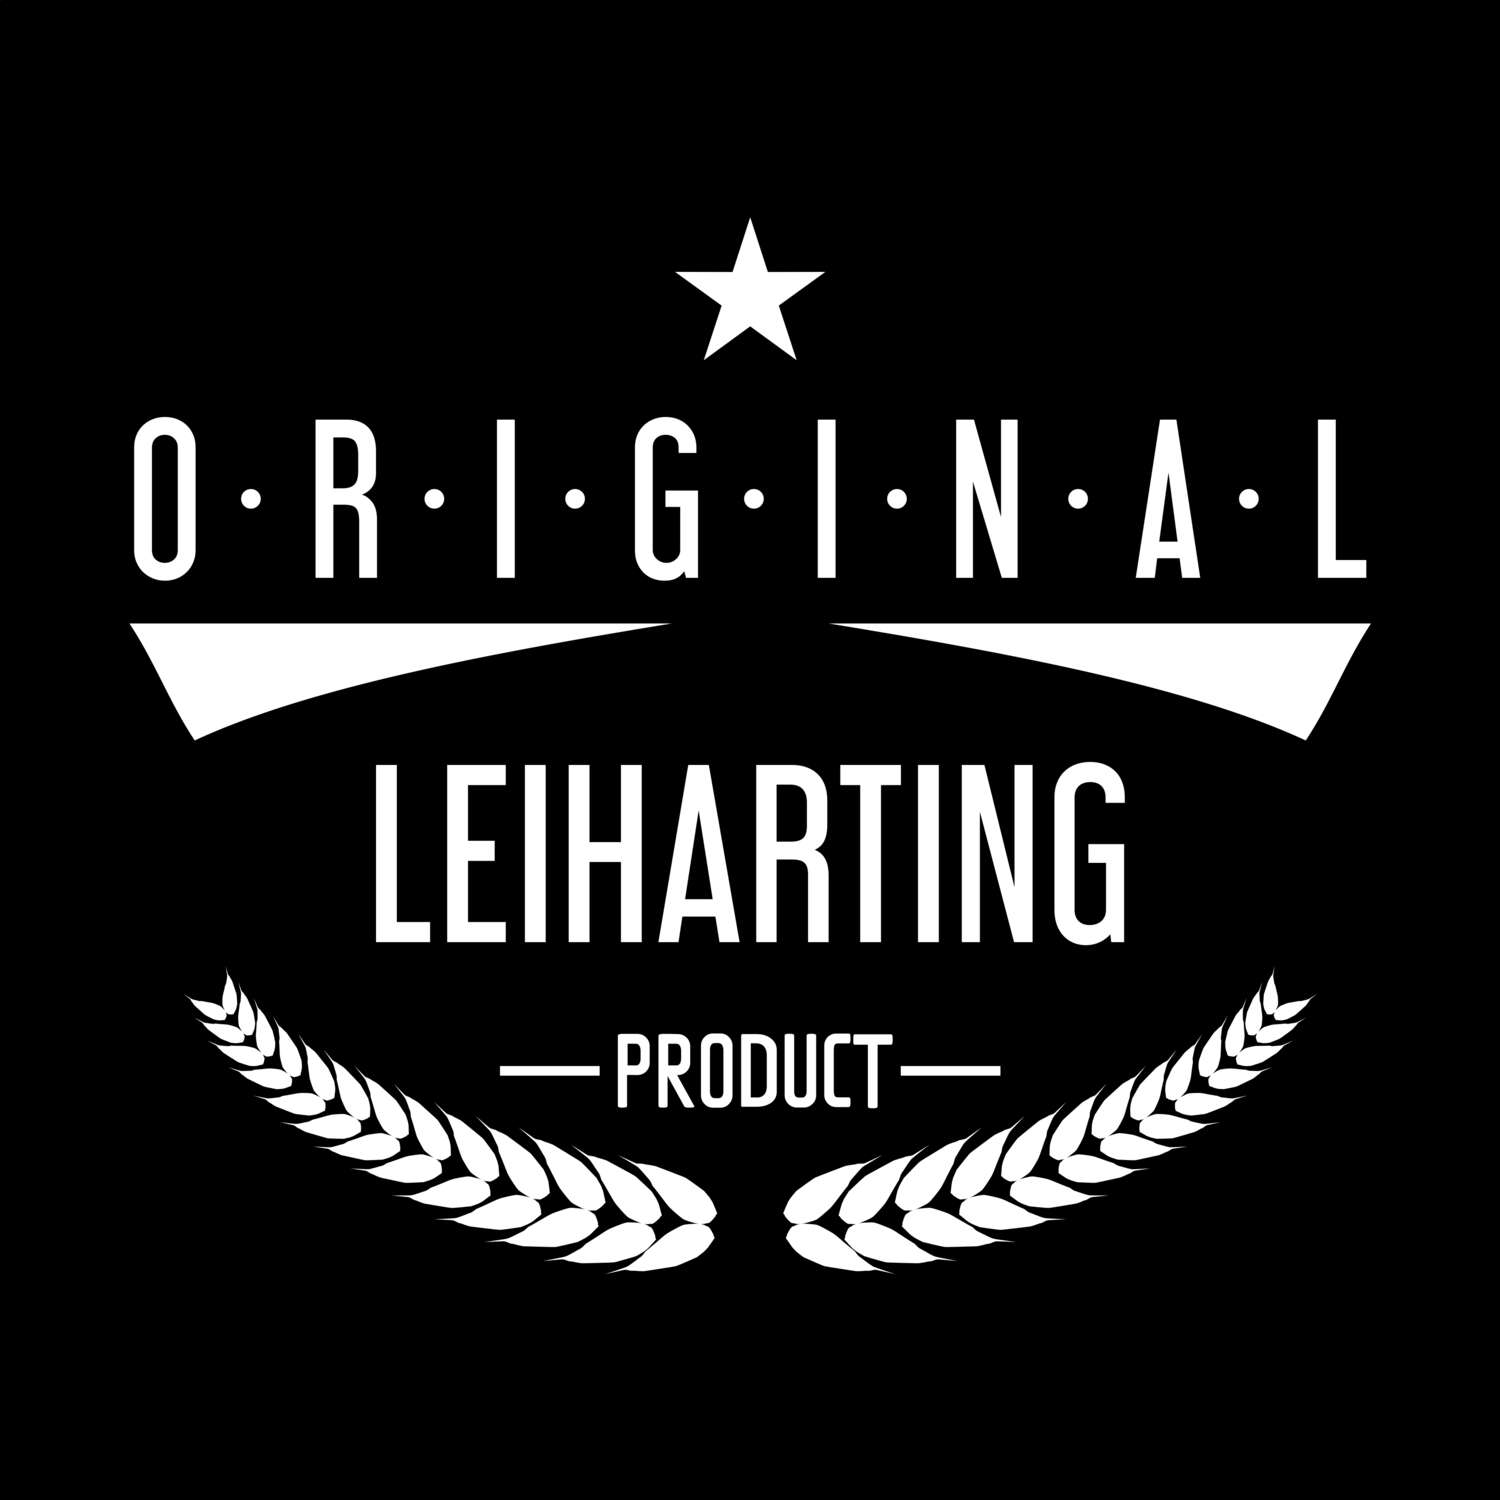 Leiharting T-Shirt »Original Product«